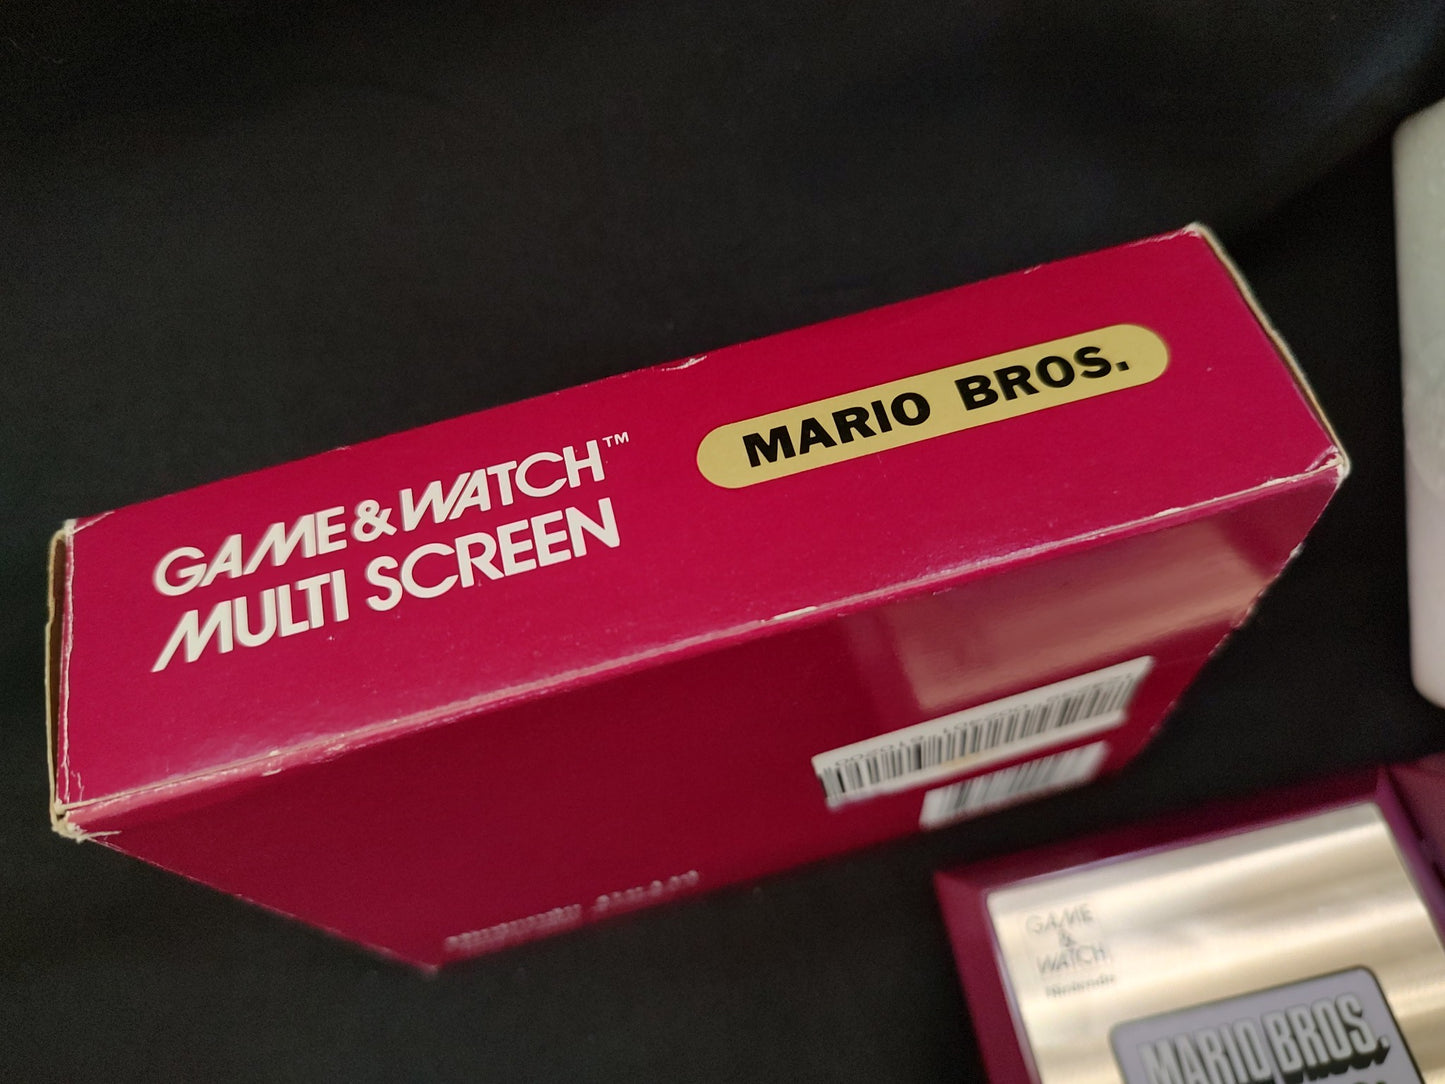 Vintage Nintendo Game & Watch MARIO BROS. ID-29 Handheld game, Working-f0804-